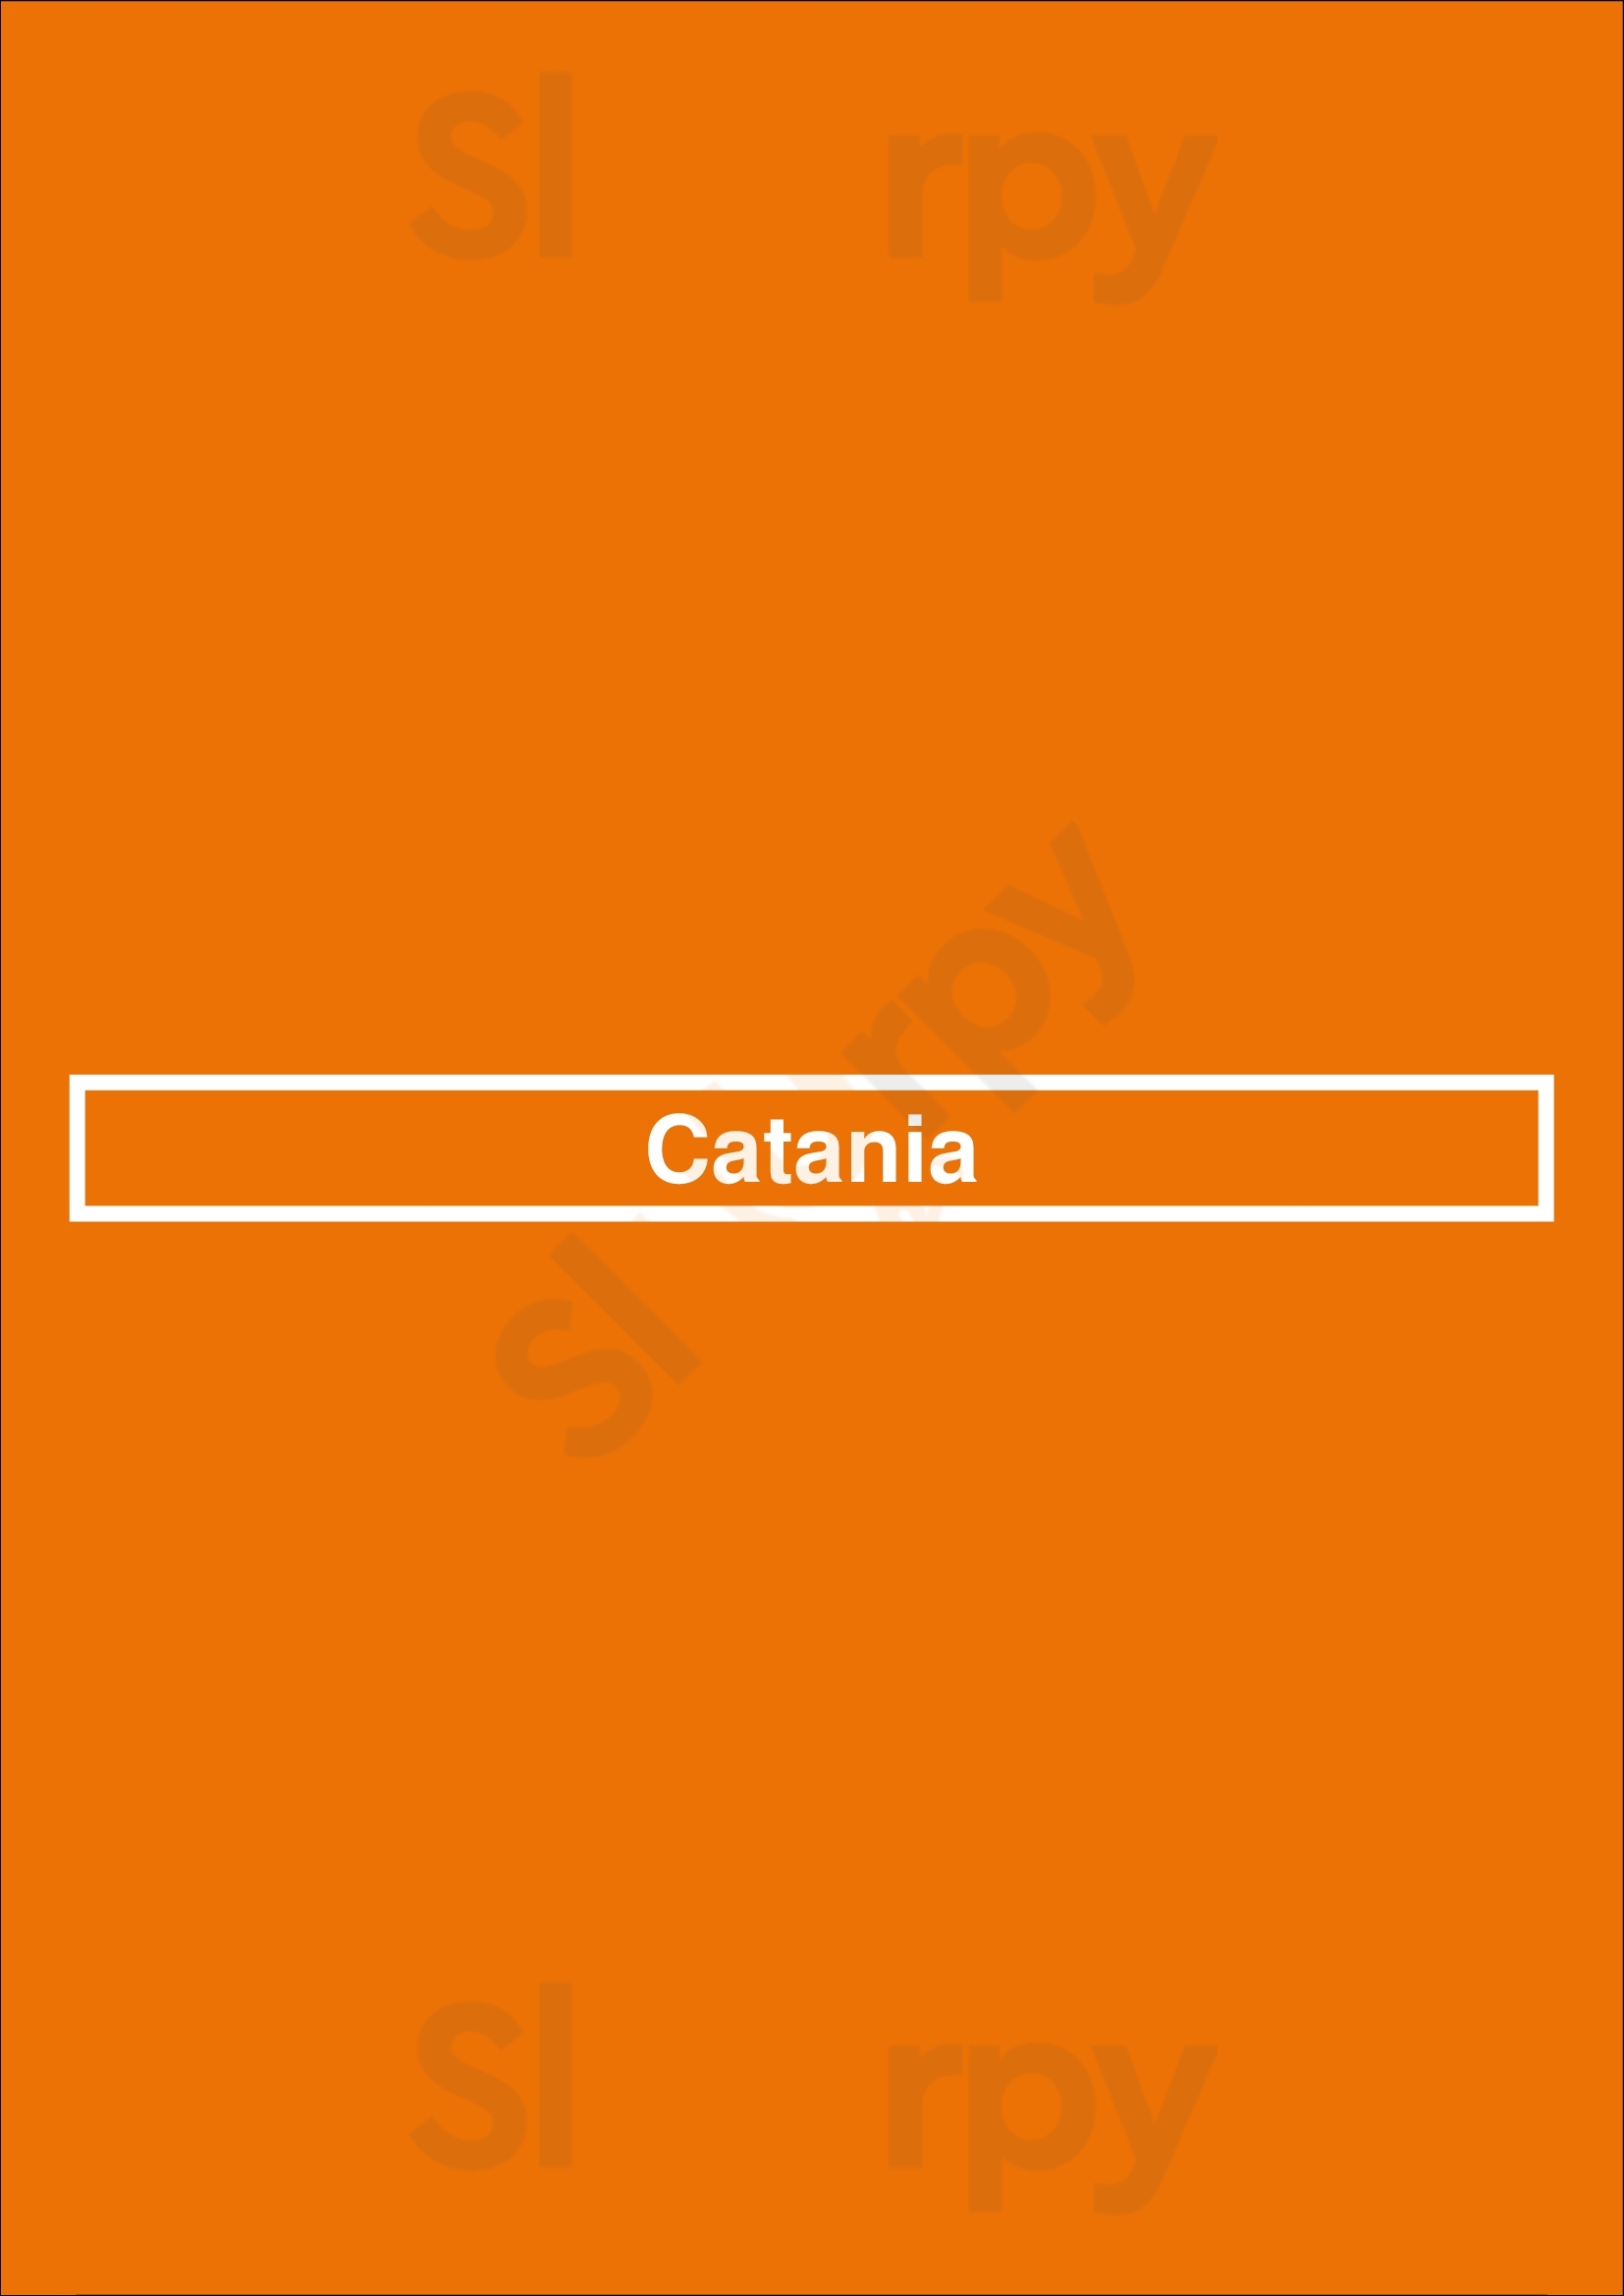 Catania La Jolla Menu - 1